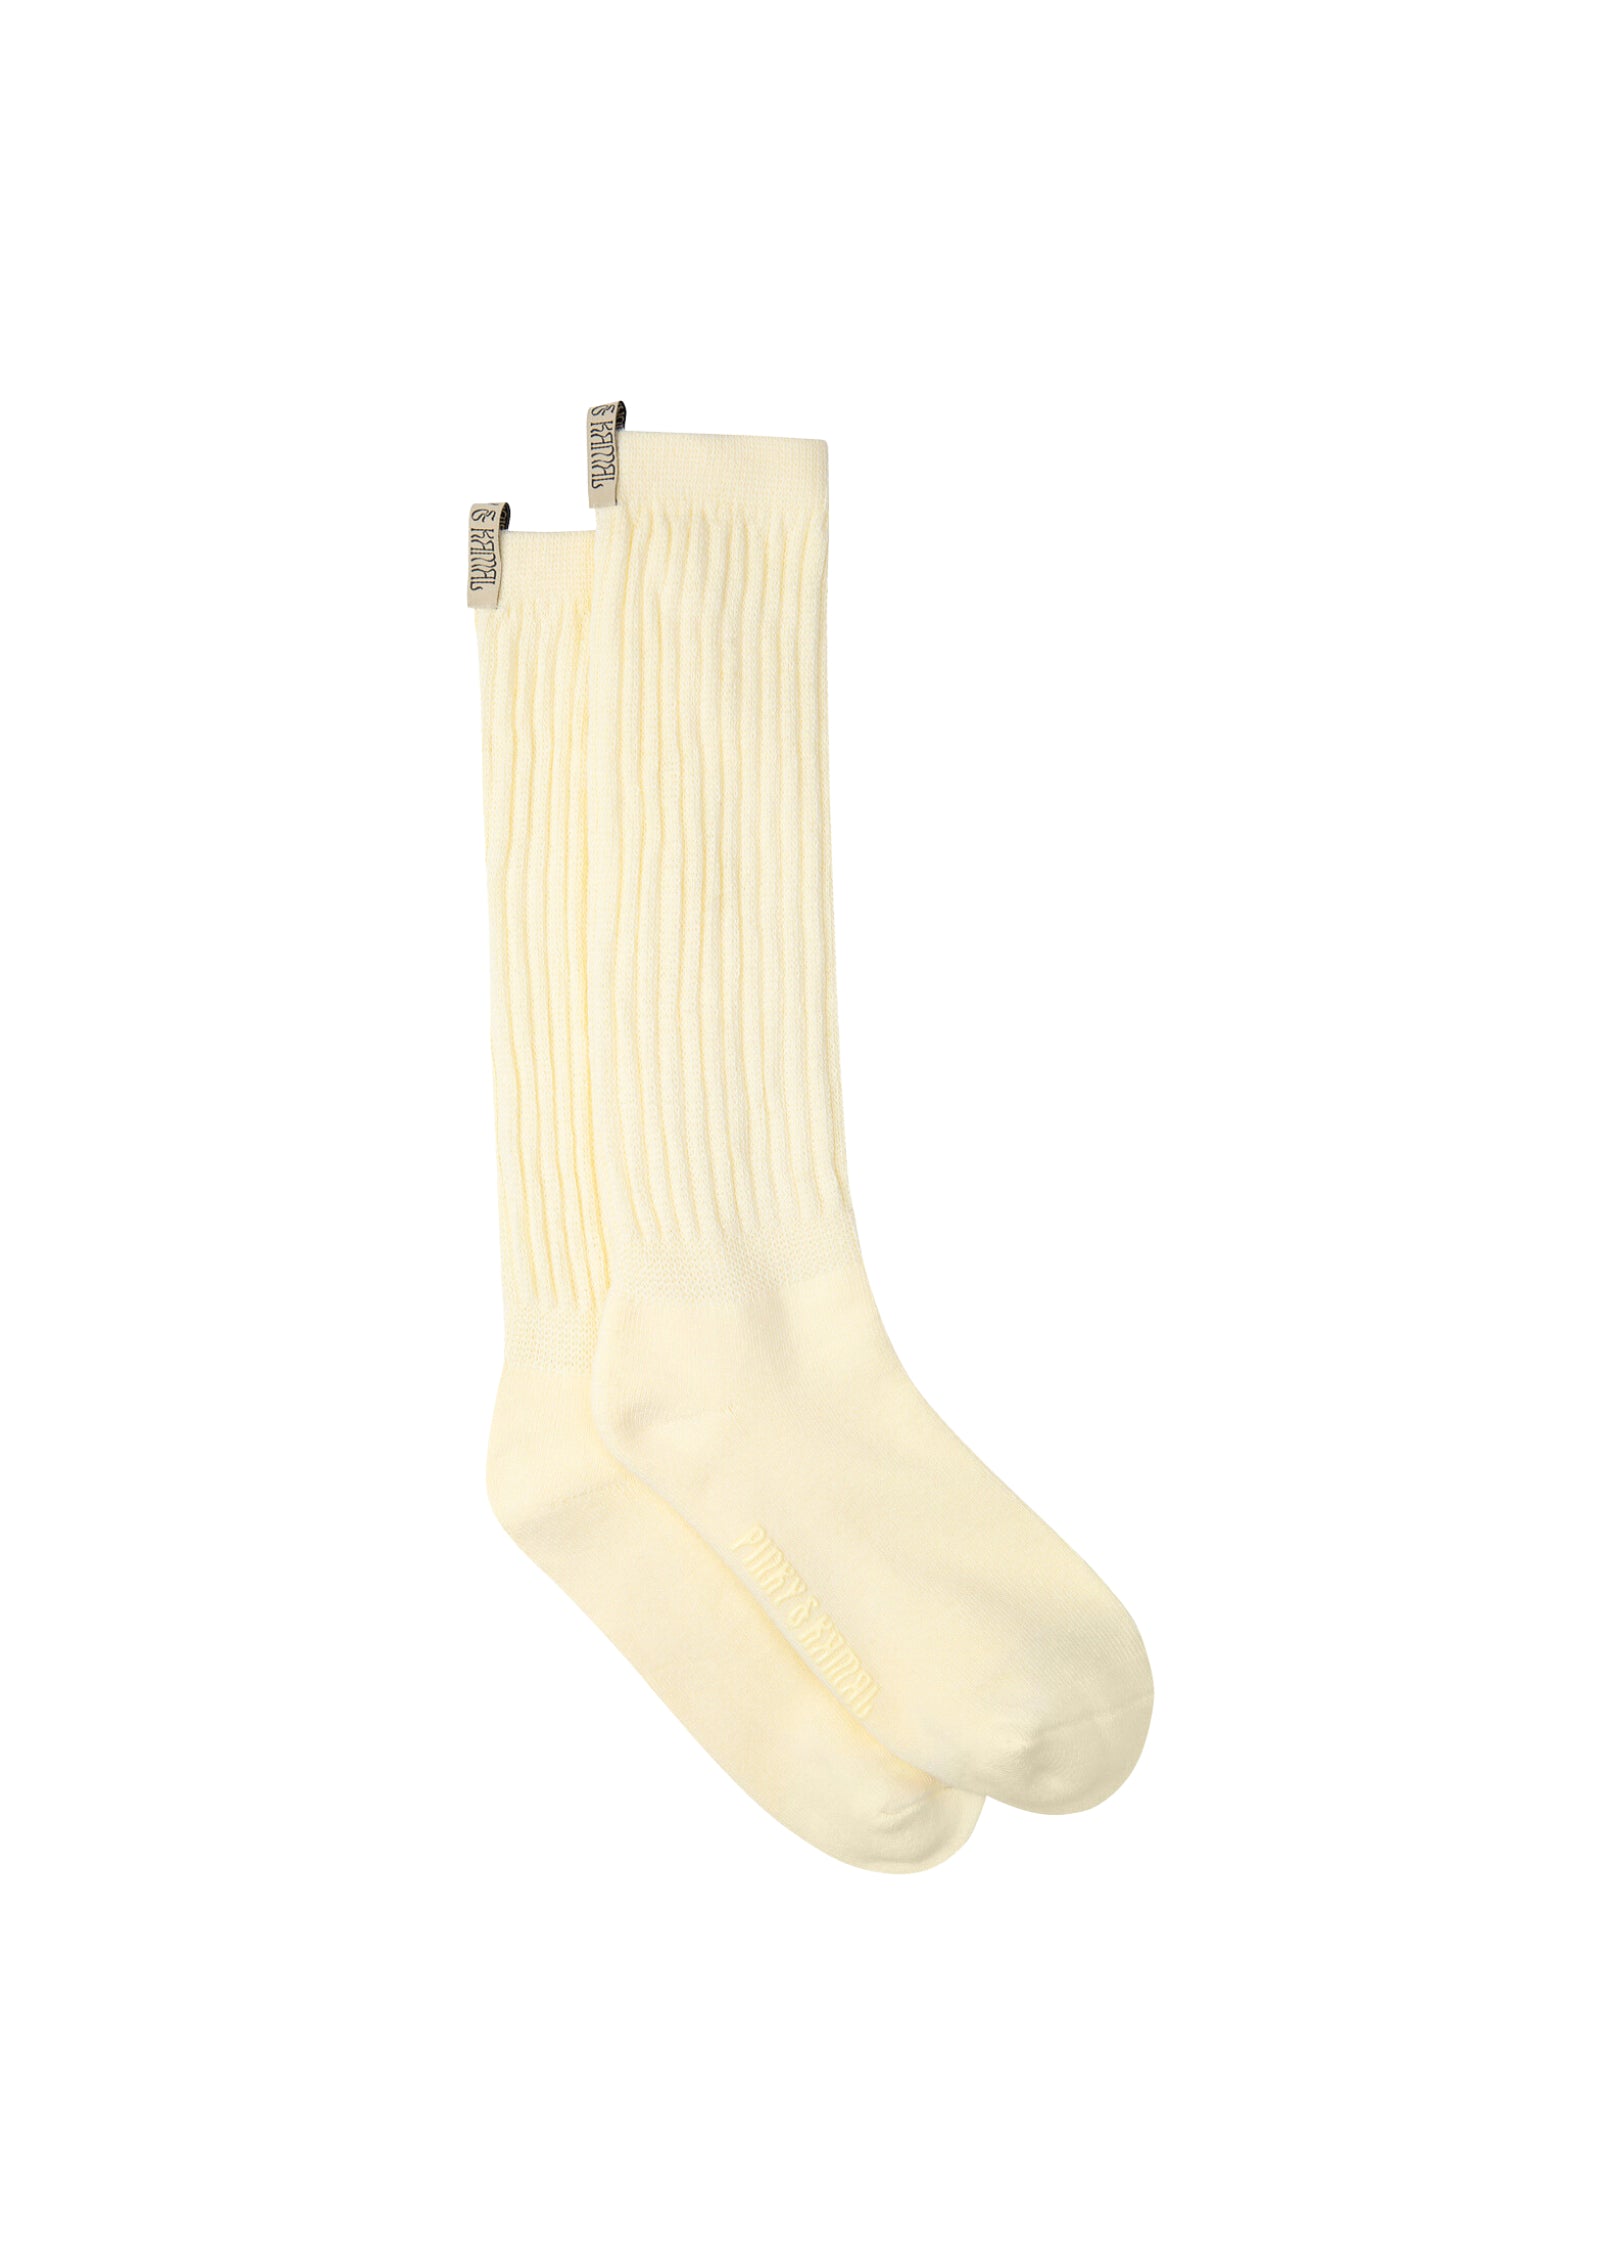 The Slouchy Sock THICK - Cream Lemon